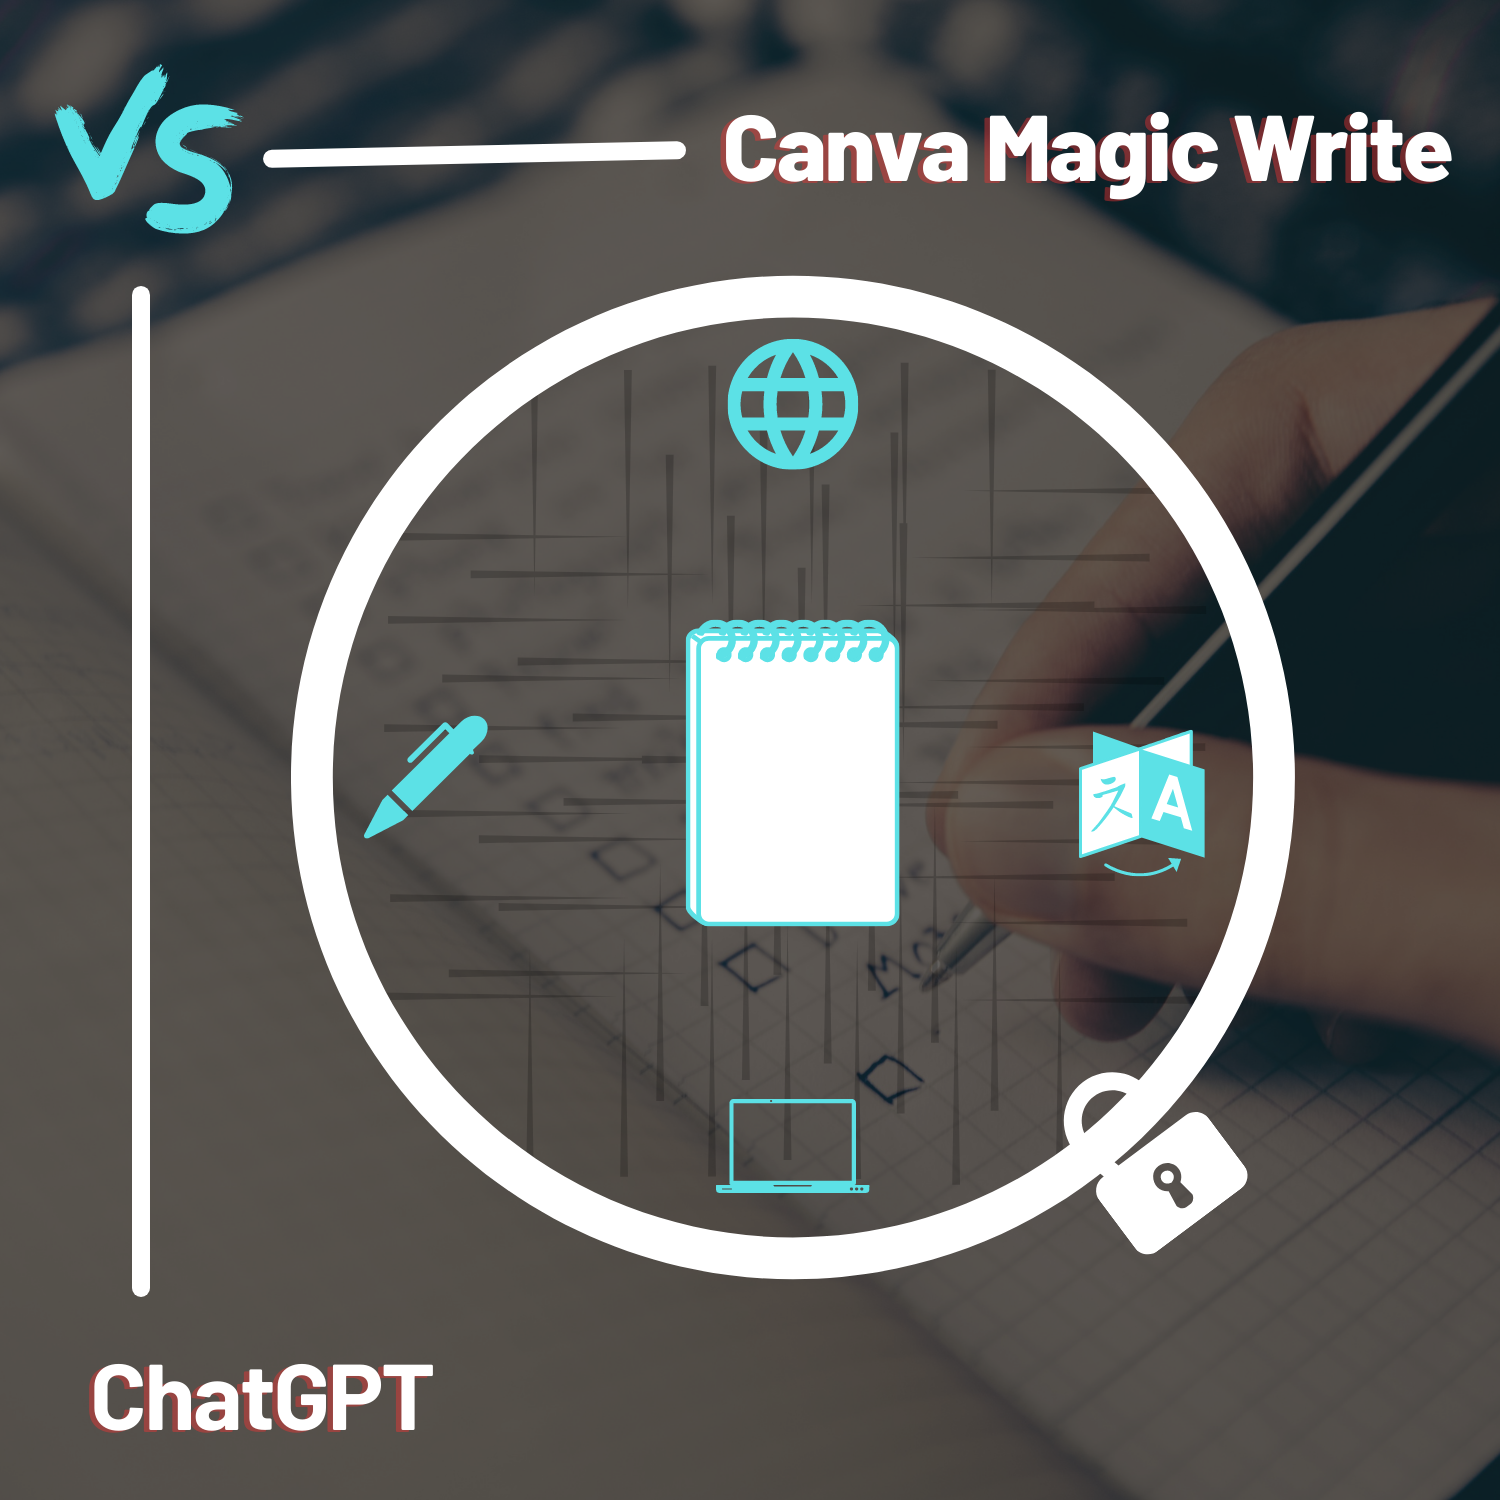 Canva Magic Write vs. ChatGPT